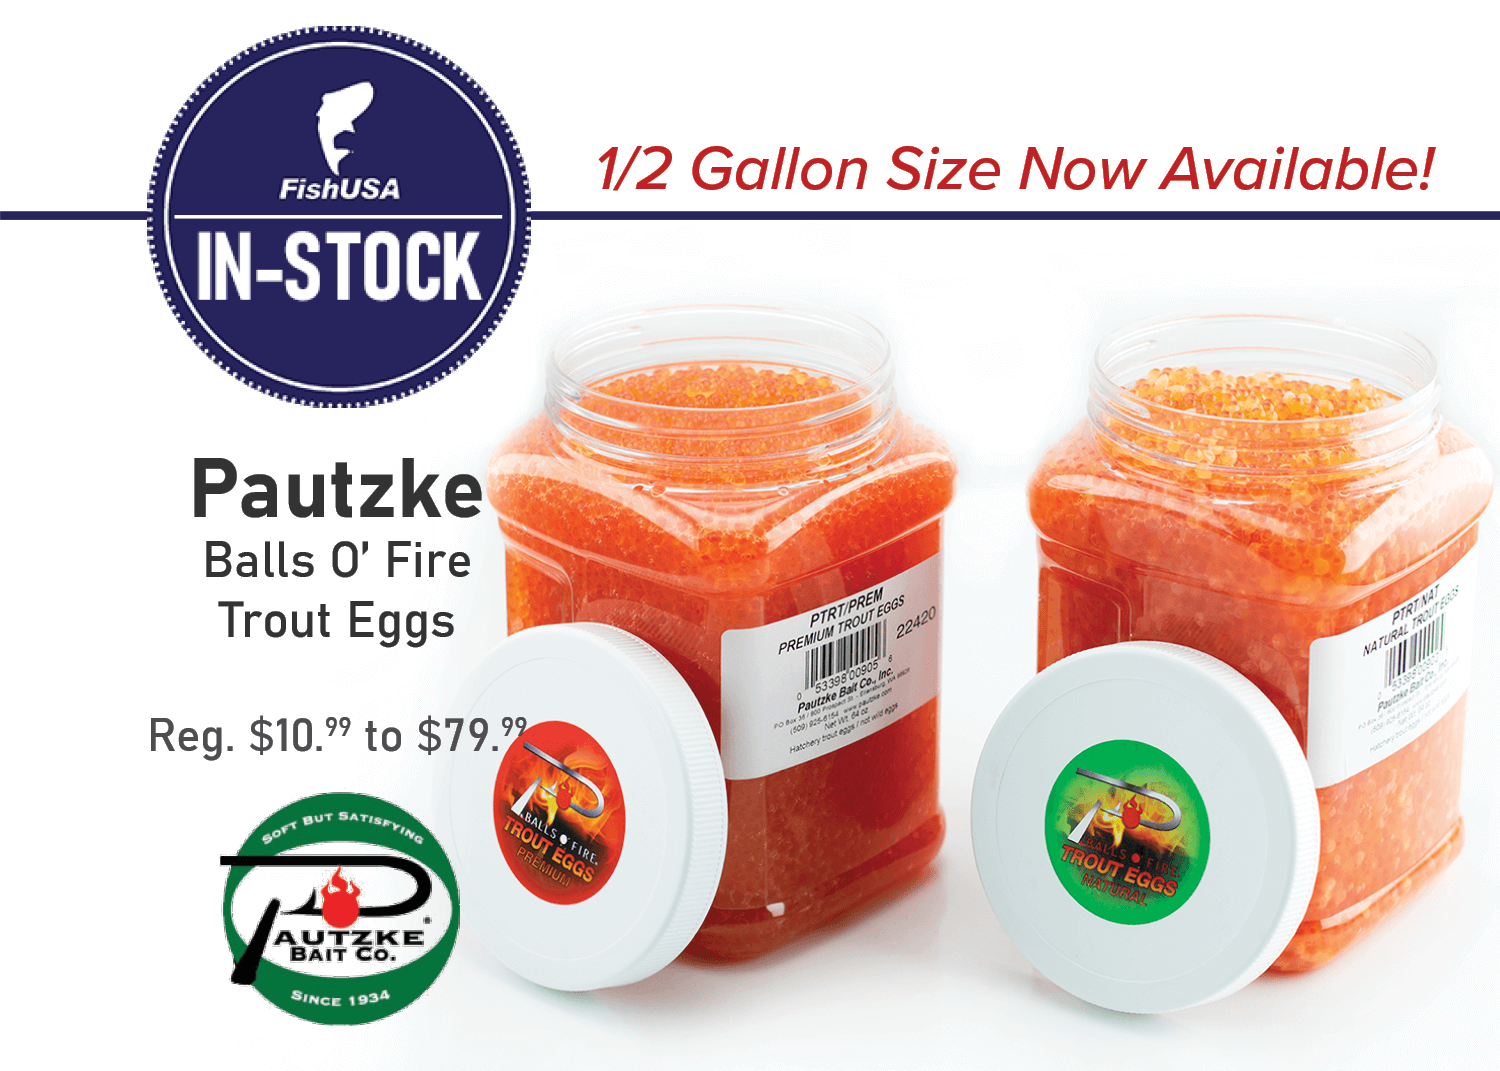 Pautzke Balls O'Fire Trout Eggs